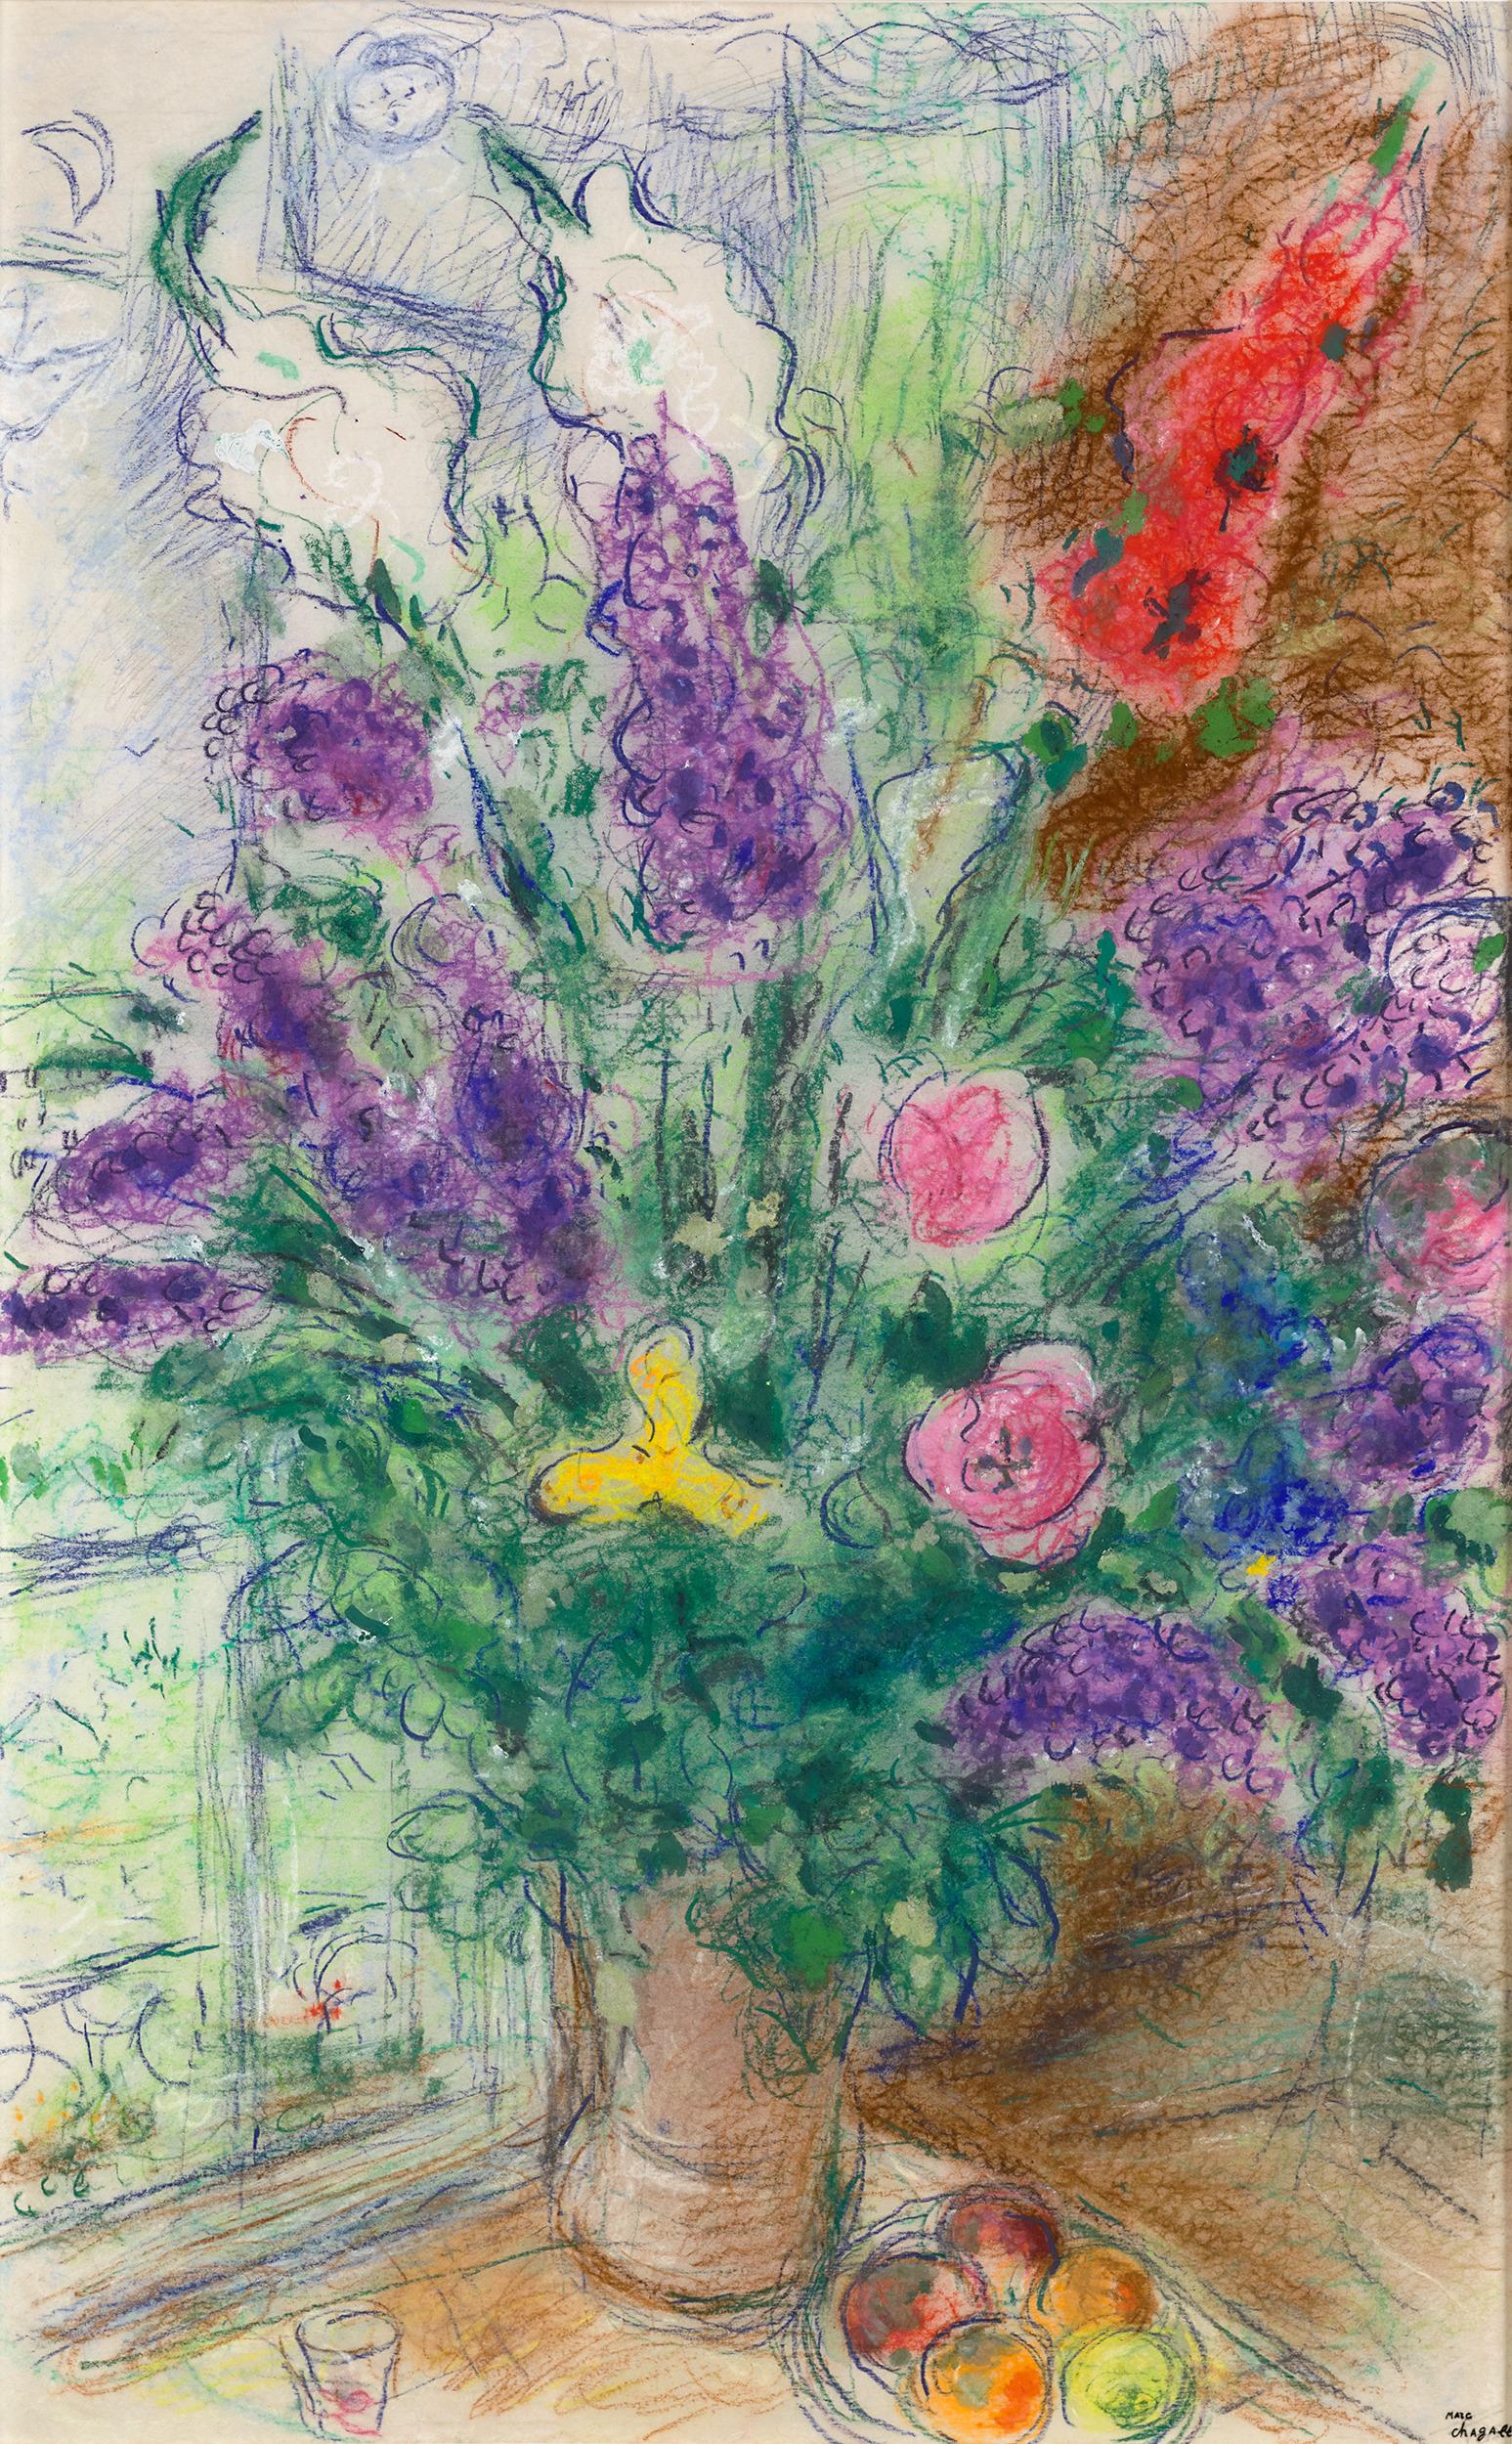 Flower Drawings and Watercolor Paintings